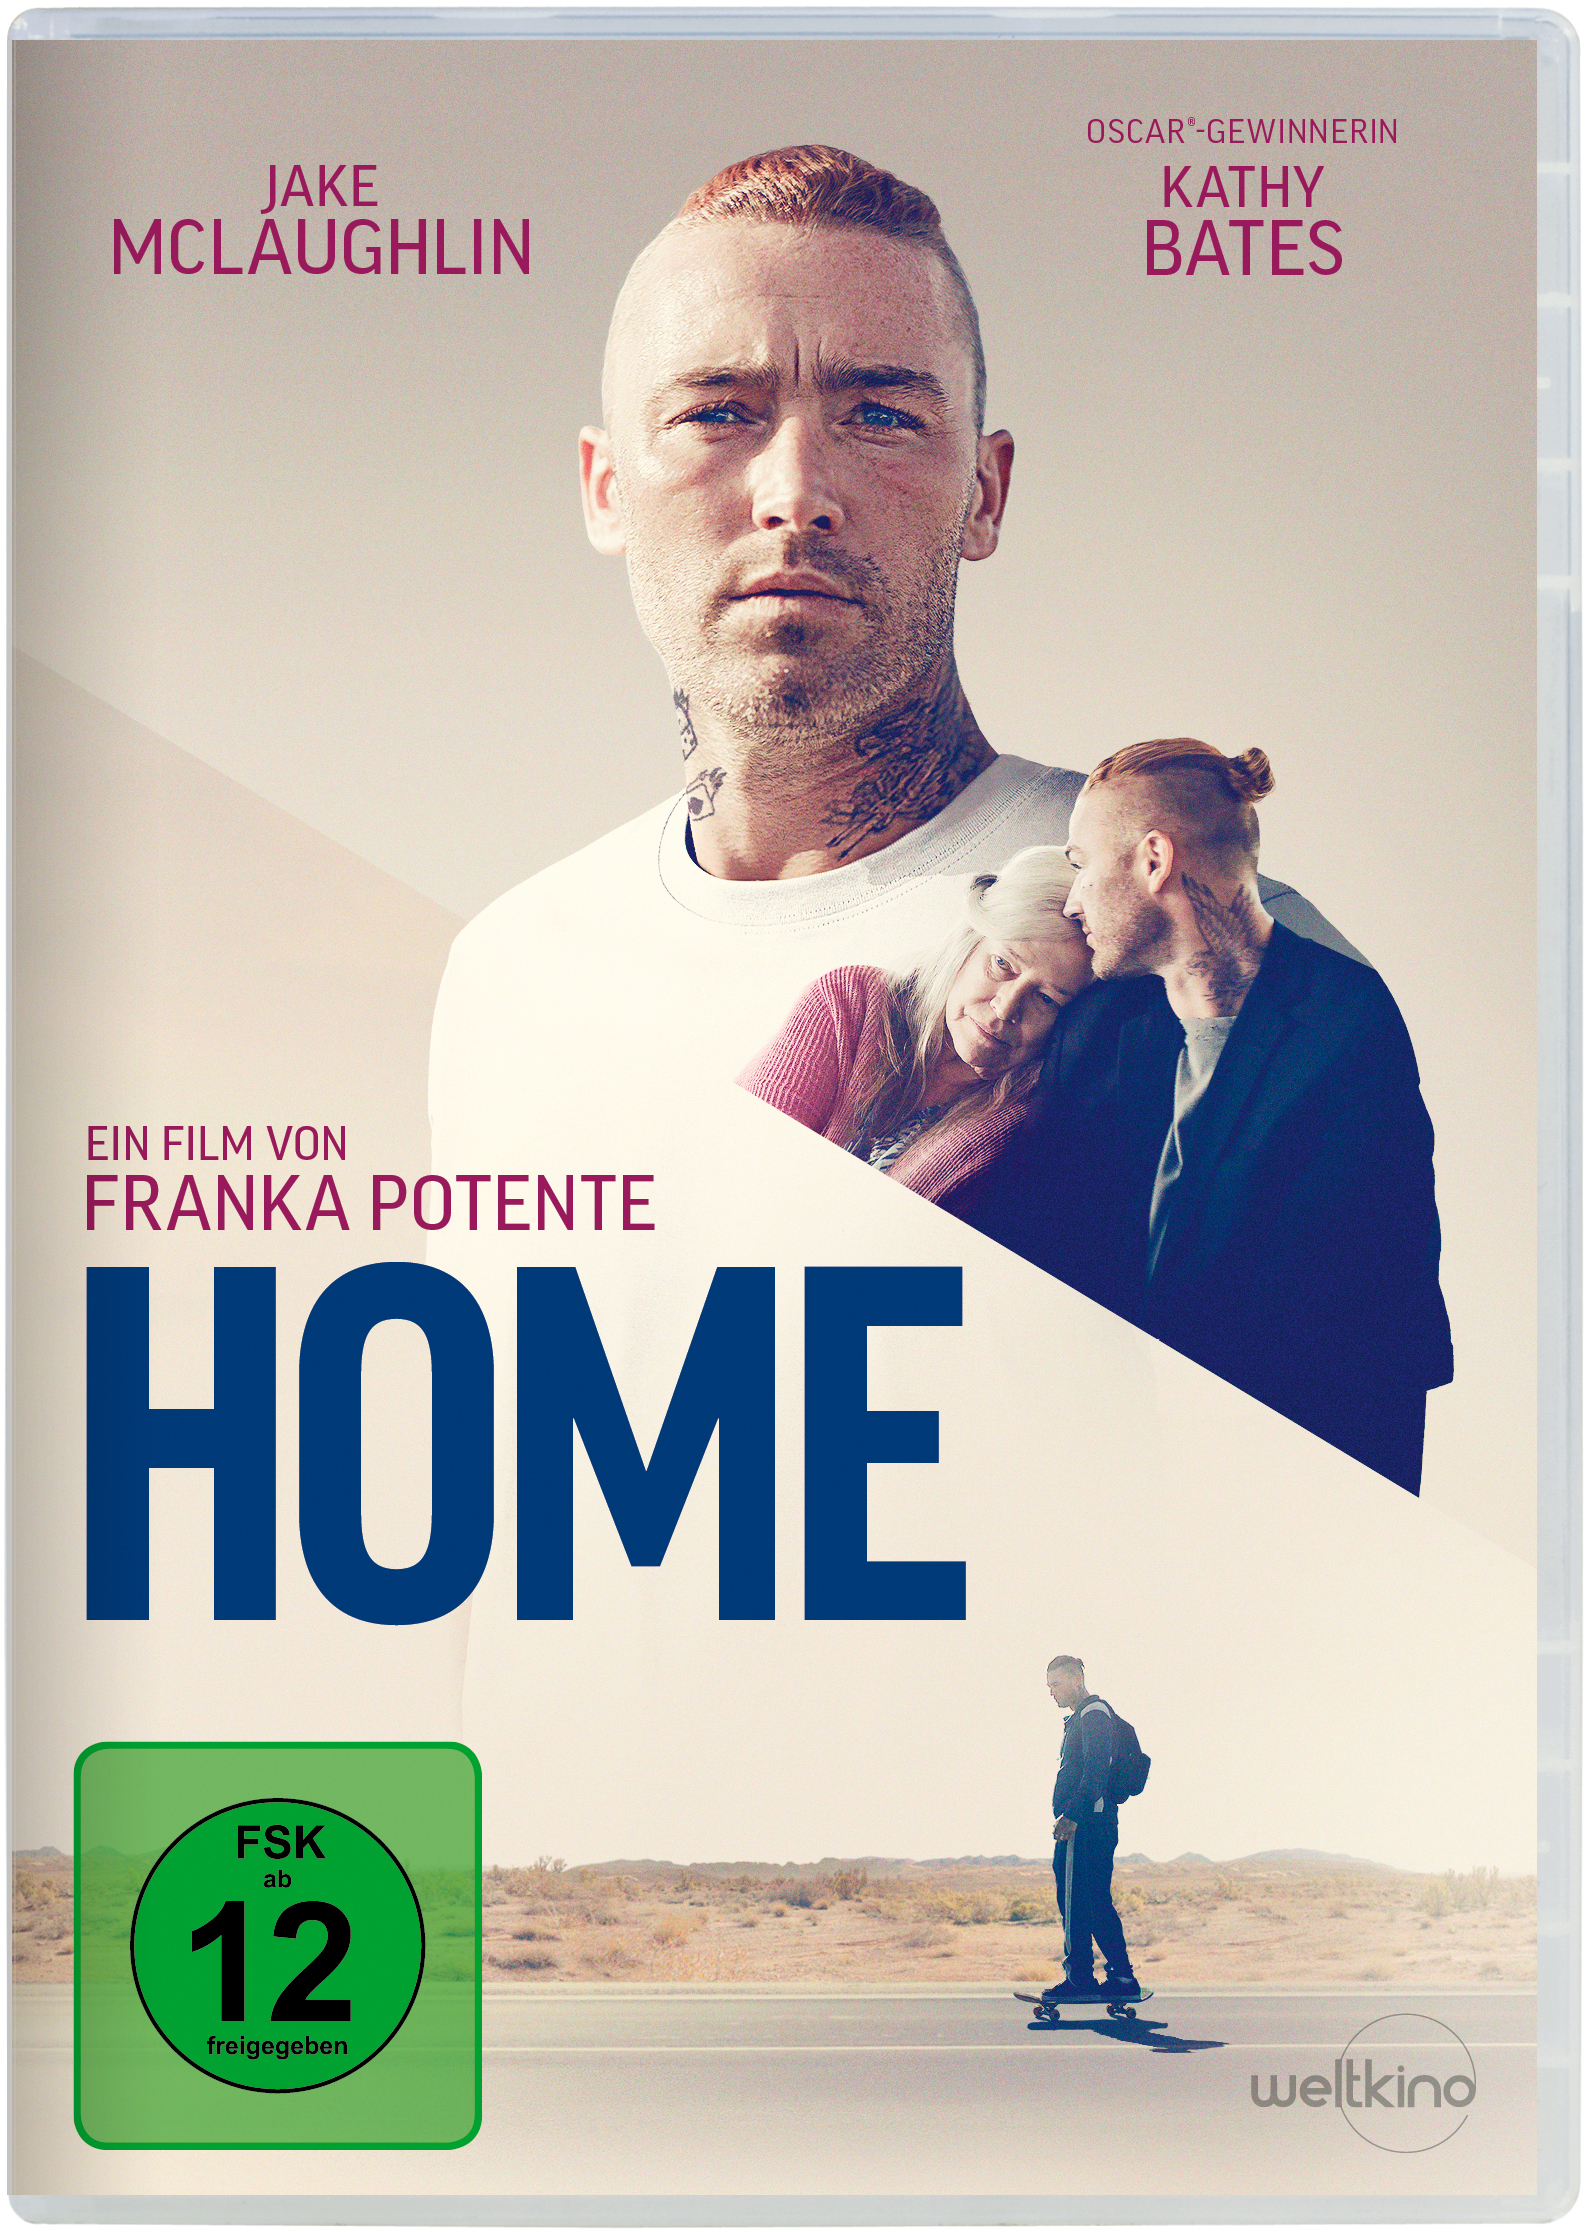 Franka Potentes "HOME" ab 24. Dezember 2021 auf DVD und digital